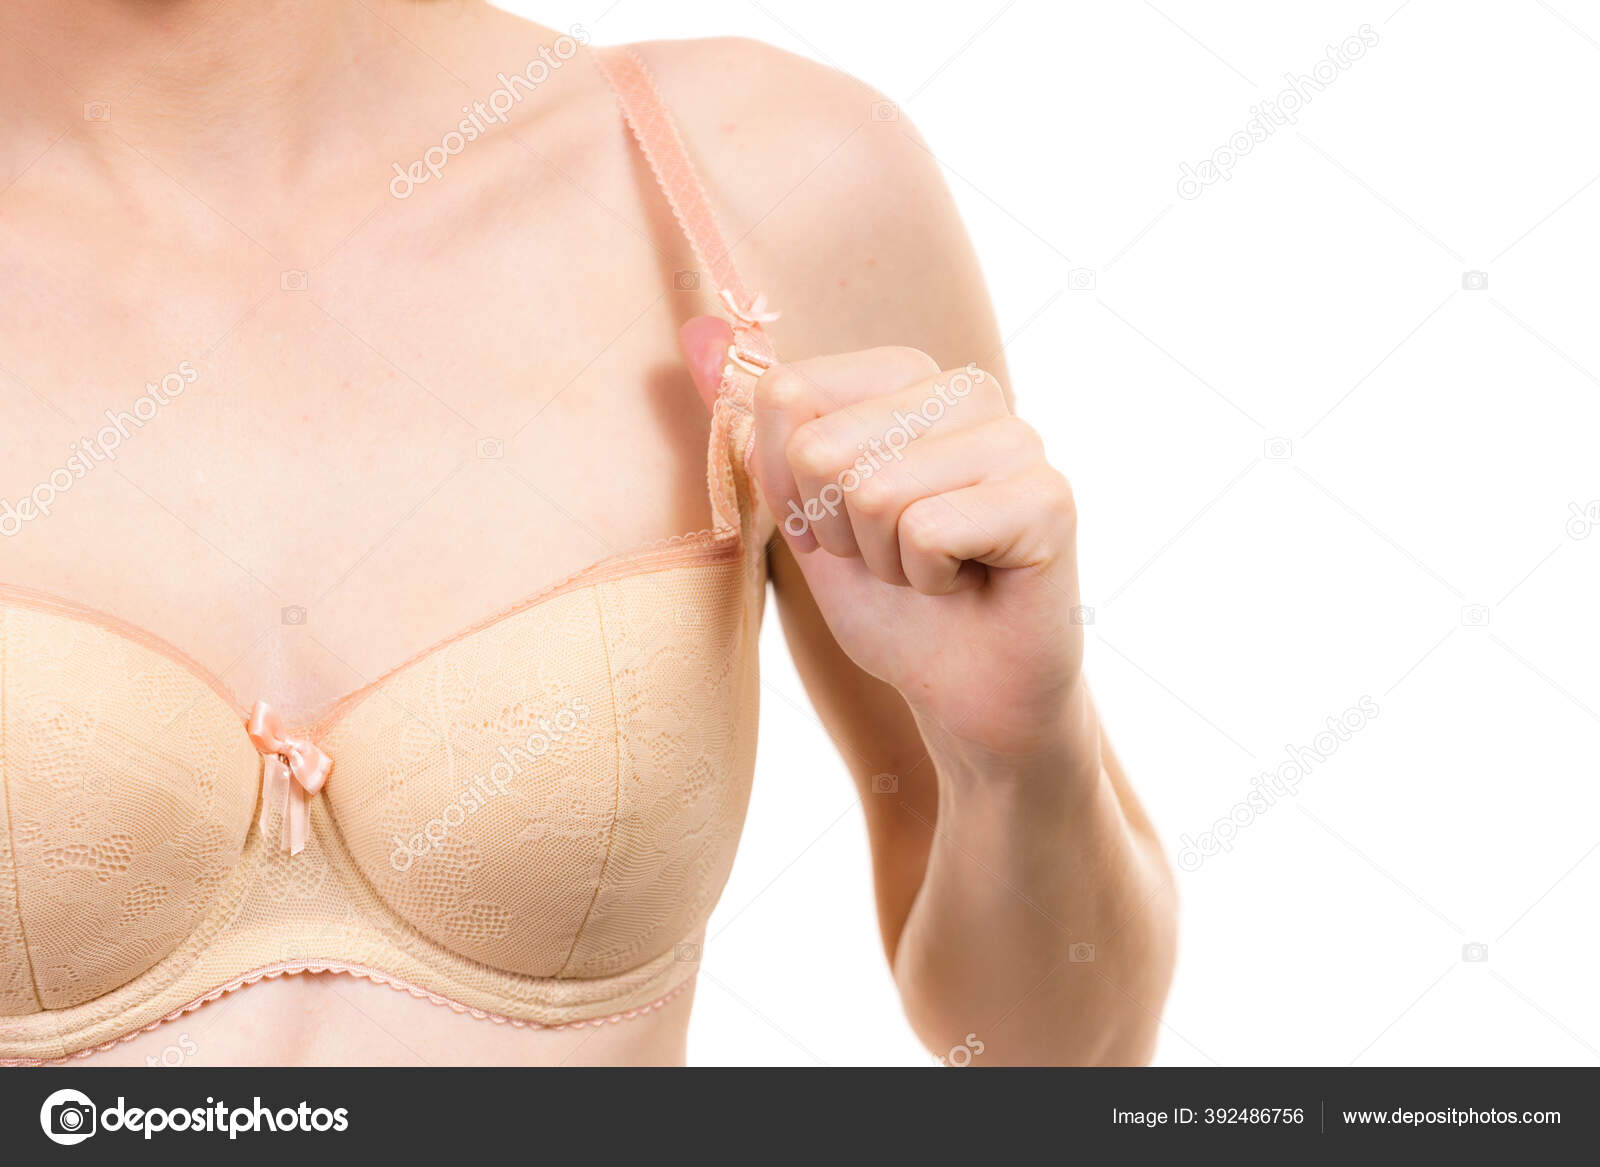 https://st4.depositphotos.com/1735158/39248/i/1600/depositphotos_392486756-stock-photo-young-woman-small-boobs-wearing.jpg